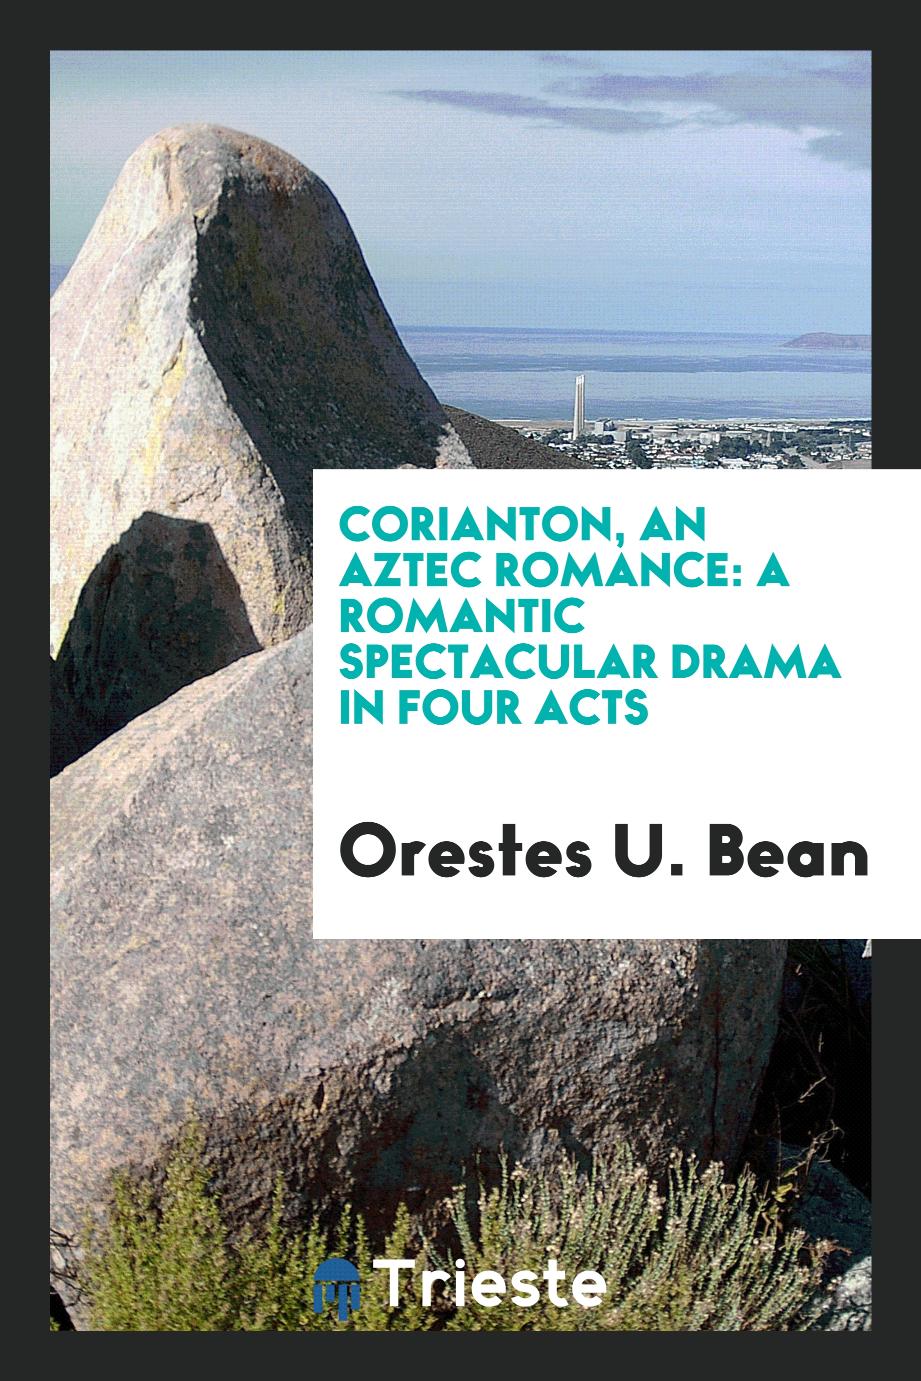 Corianton, an Aztec romance: a romantic spectacular drama in four acts